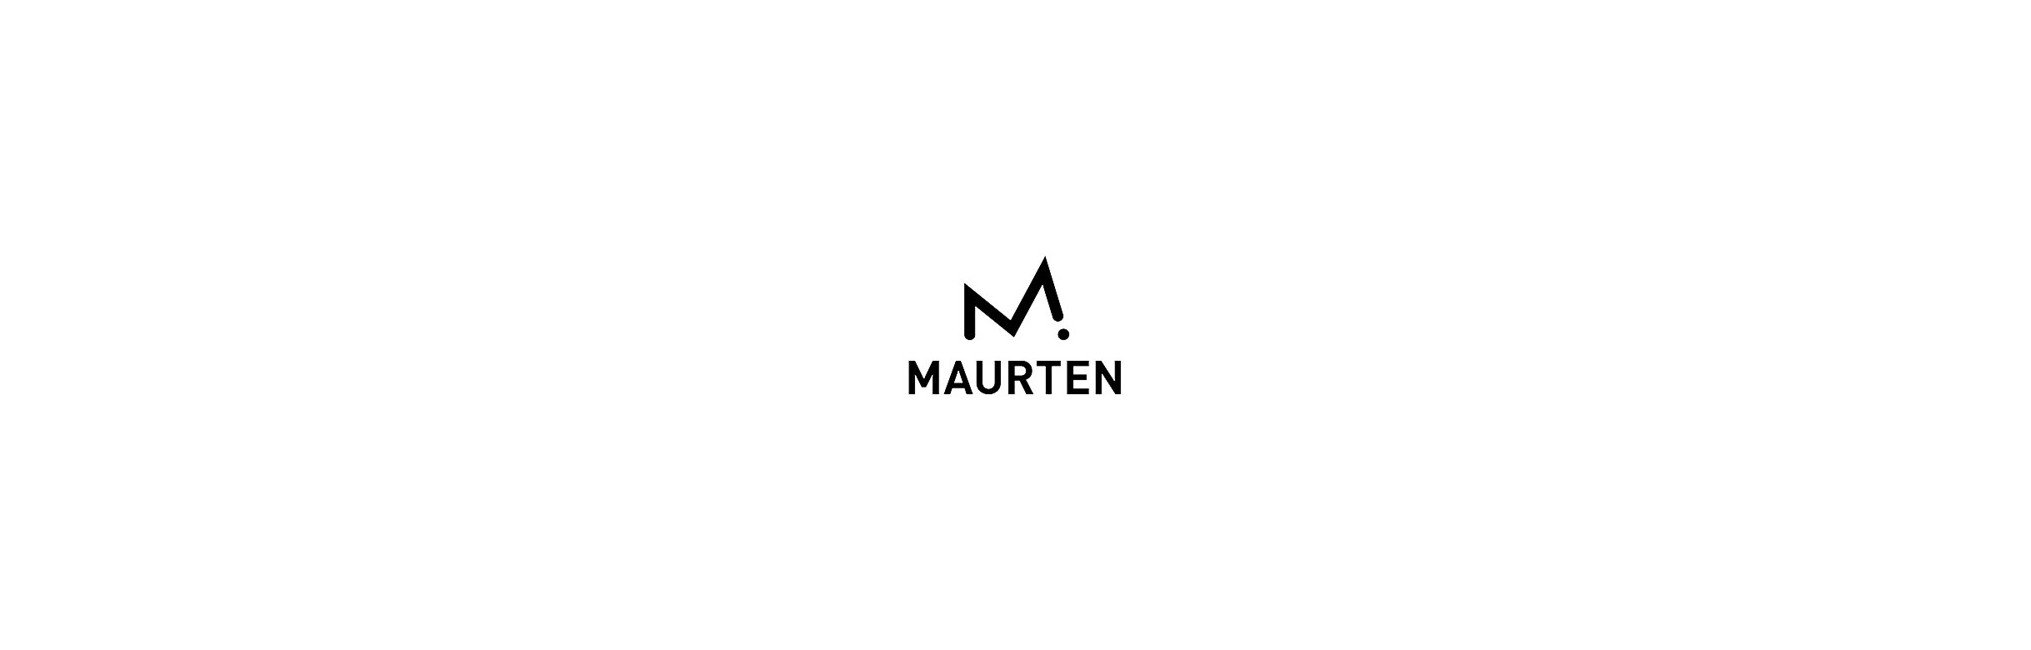 Maurten Gel 100 - Box of 48pcs (211026)